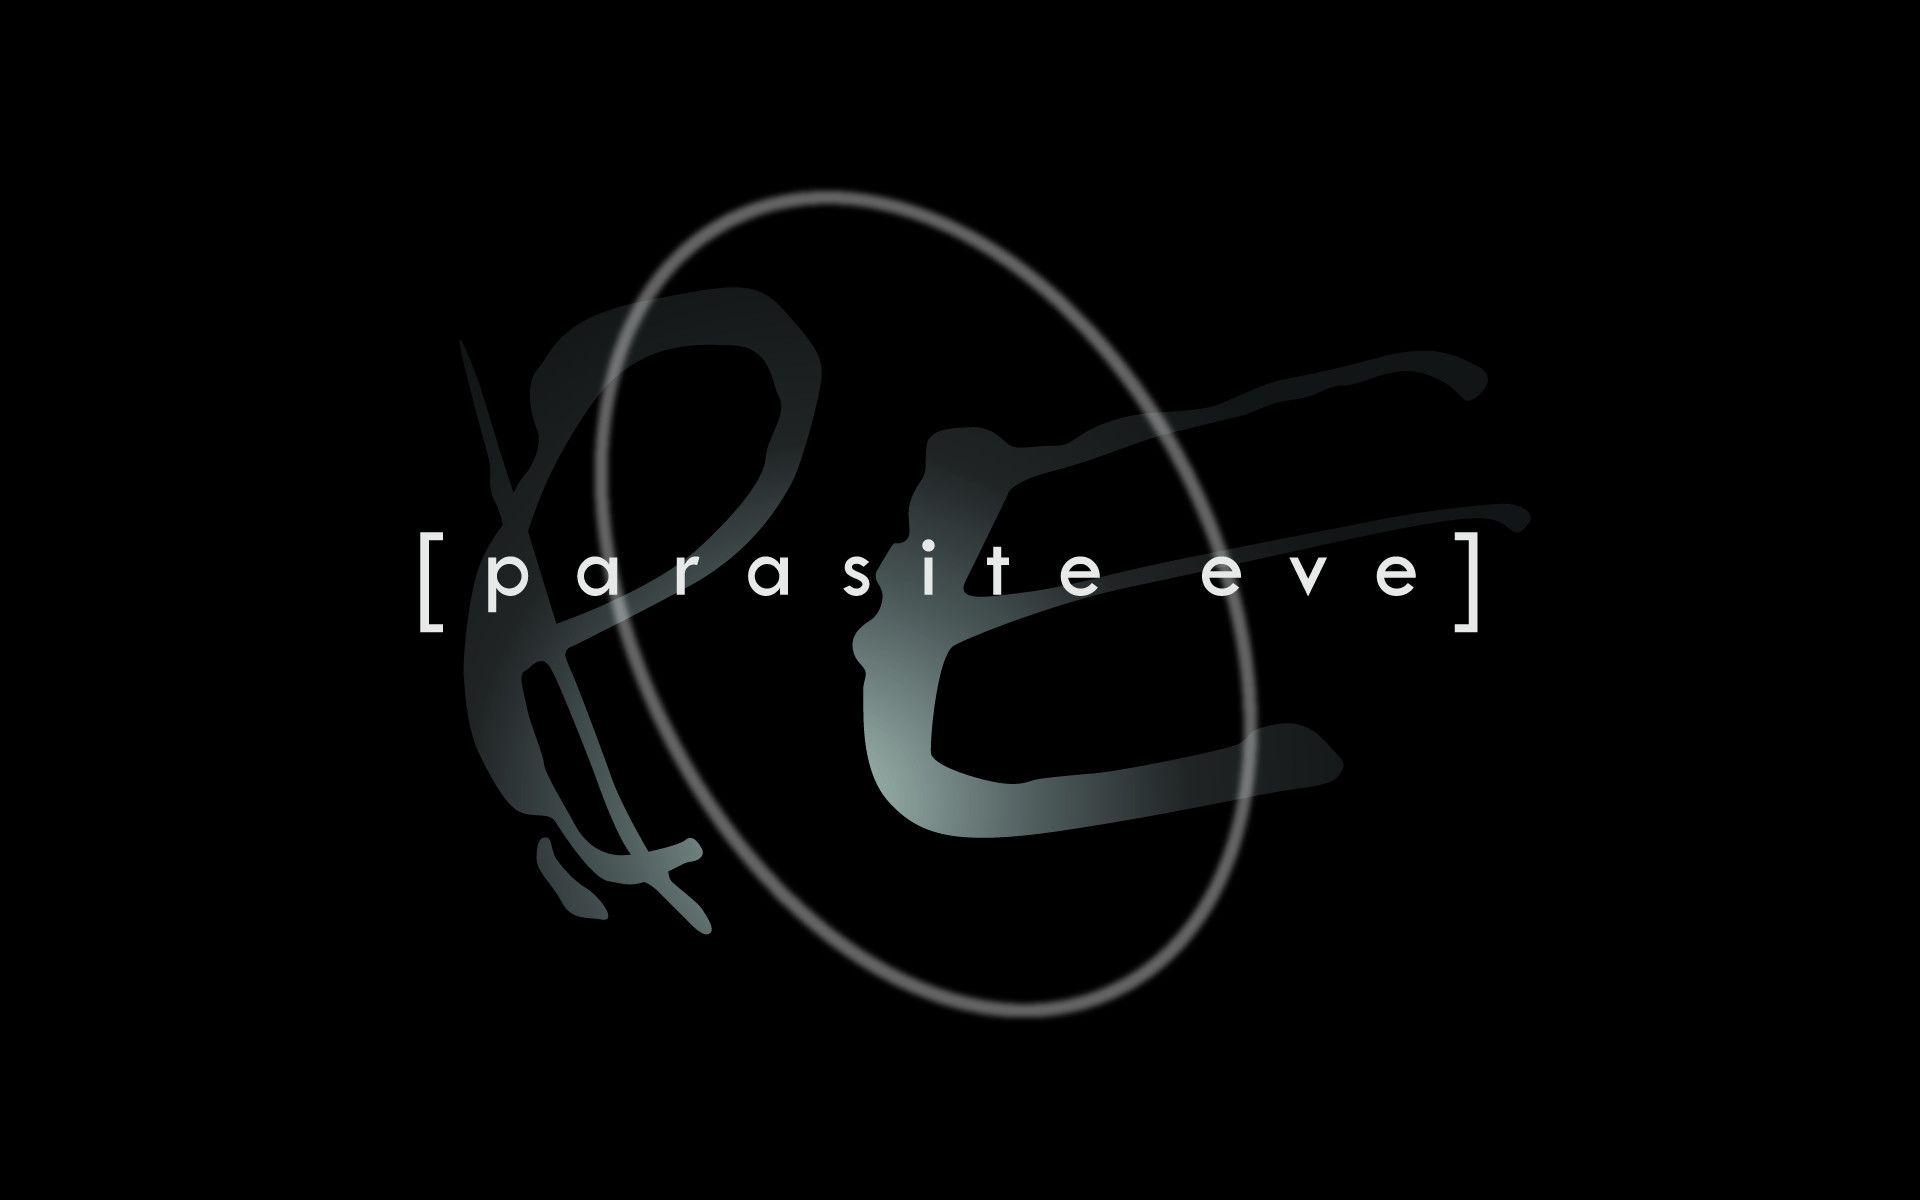 Parasite Eve 2 Wallpaper